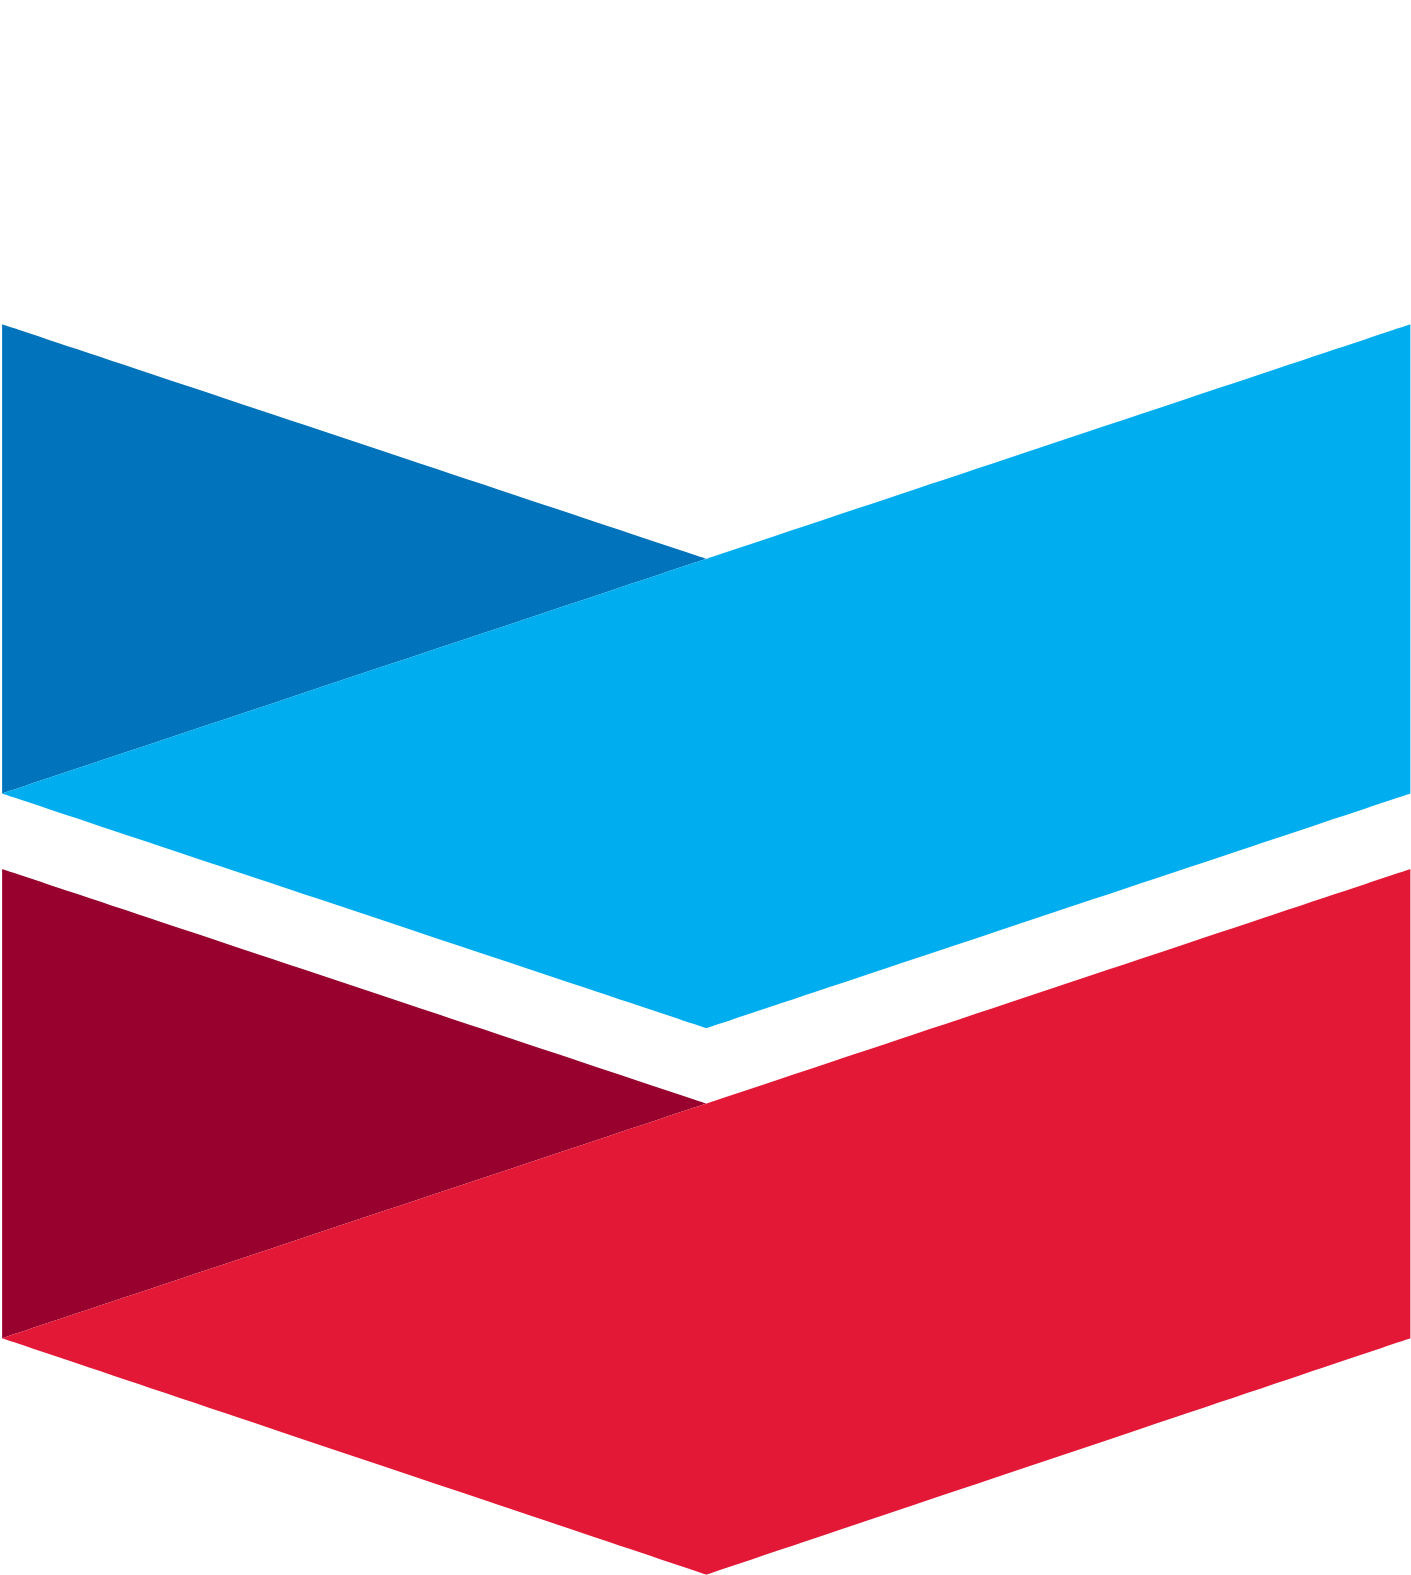 Chevron logo large for dark backgrounds (transparent PNG)